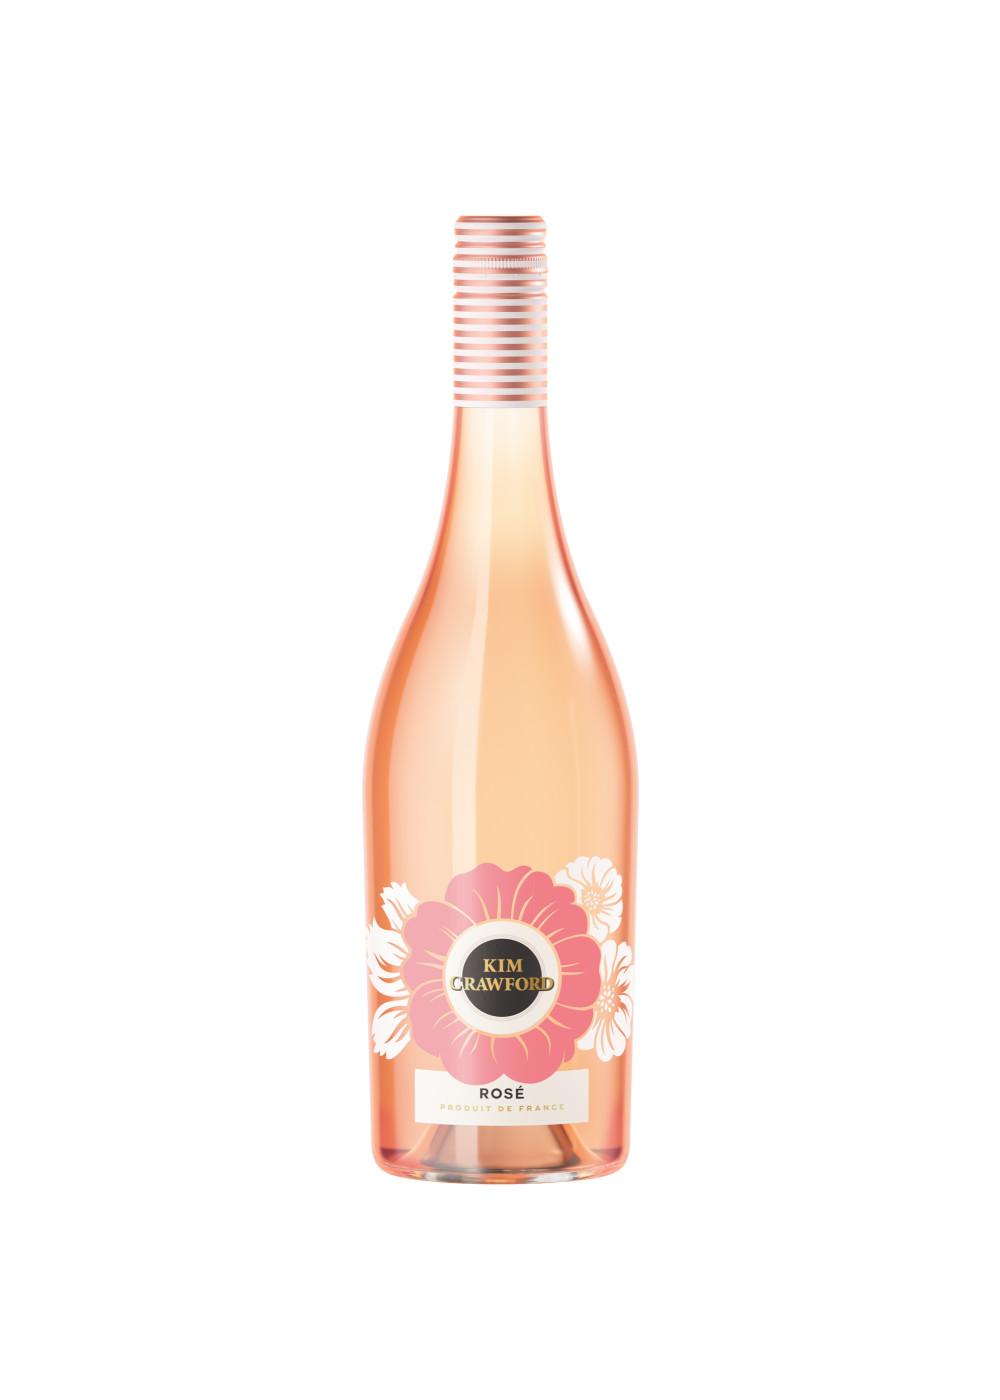 Kim Crawford Rose Wine 750 mL Bottle; image 1 of 4